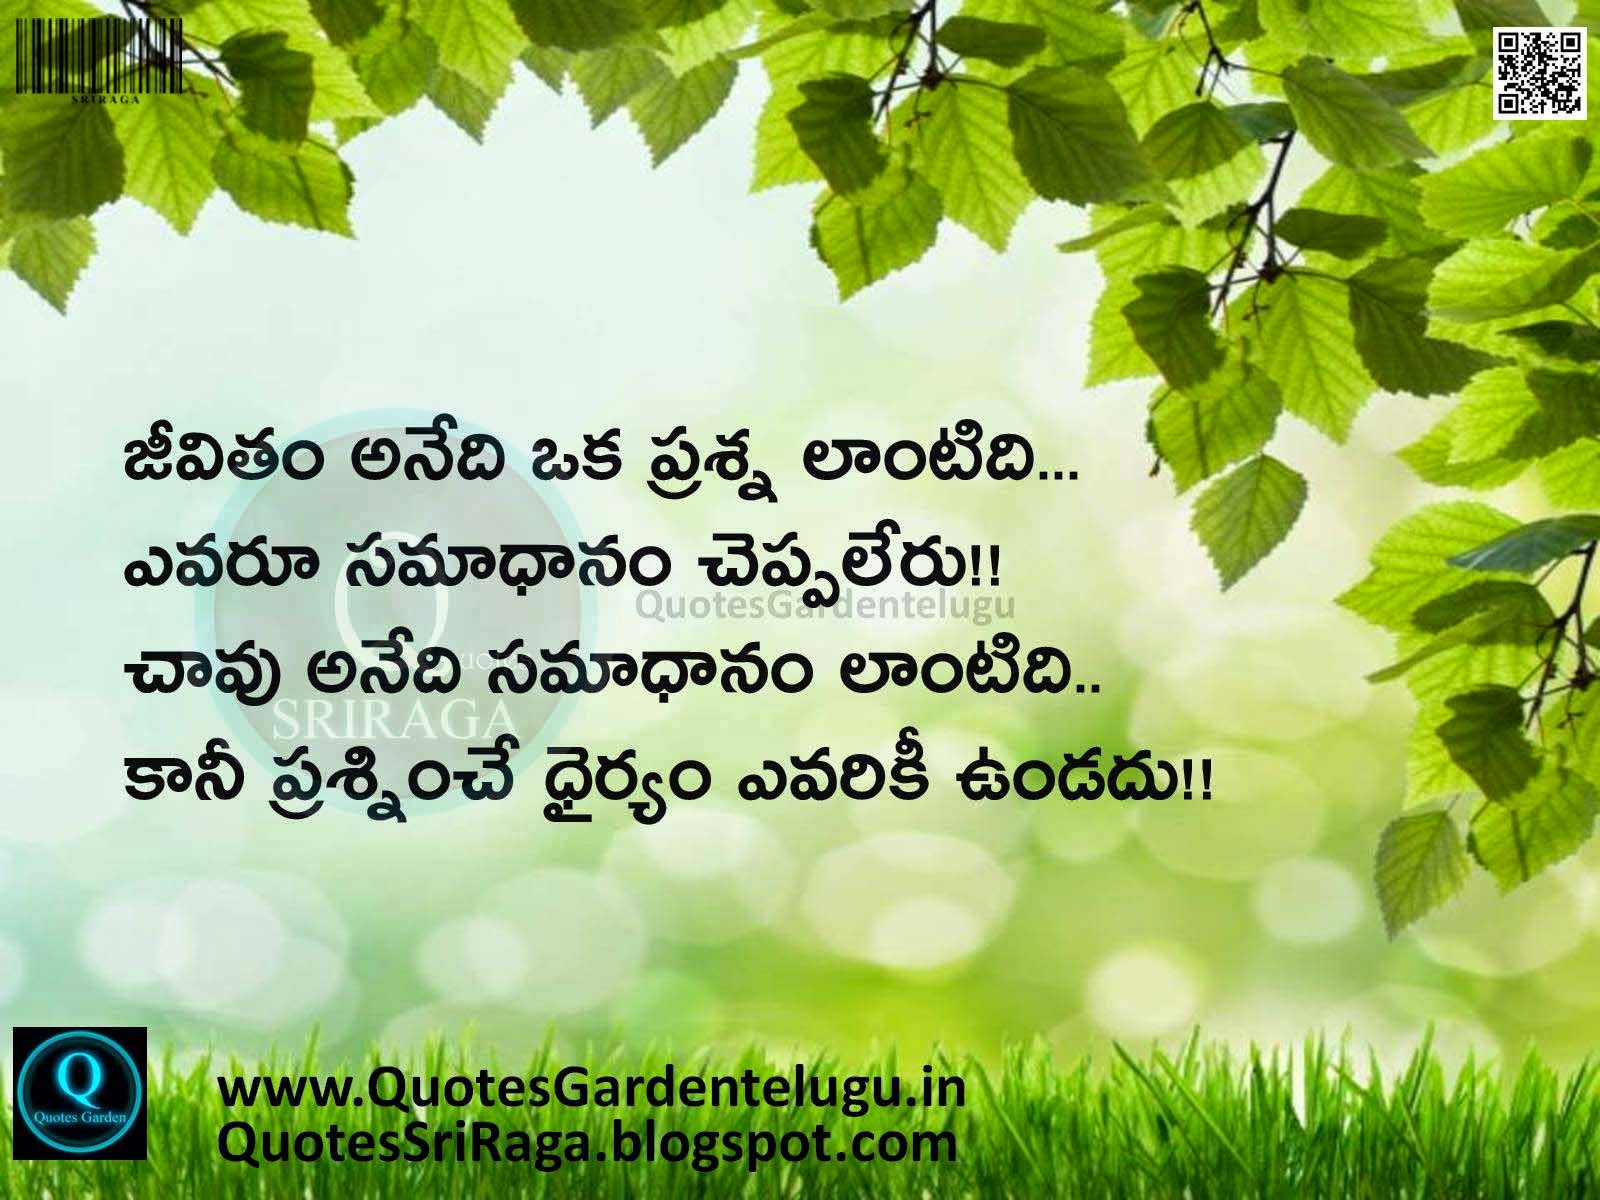 Best telugu life quotes- Life quotes in telugu - Best inspirational quotes about life - Best telugu inspirational quotes - Best telugu inspirational quotes about life